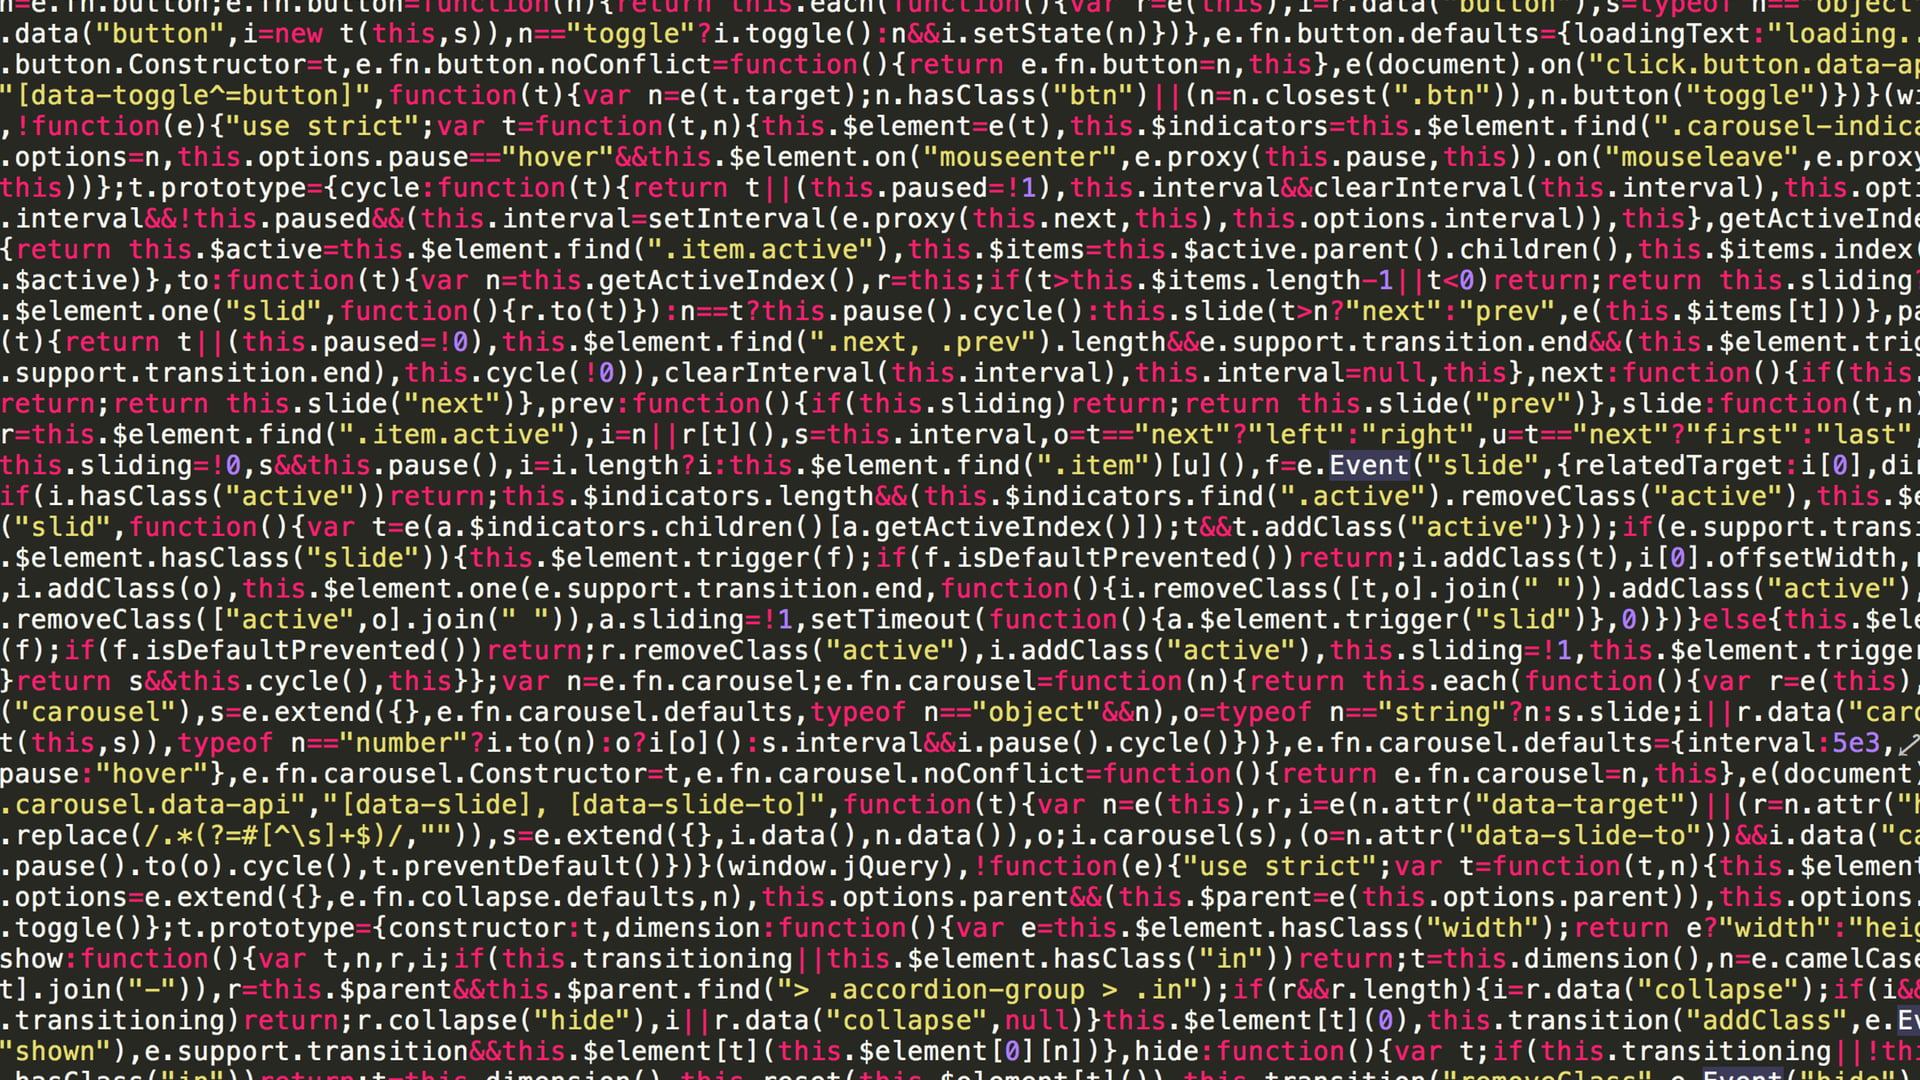 multicolored programming codes